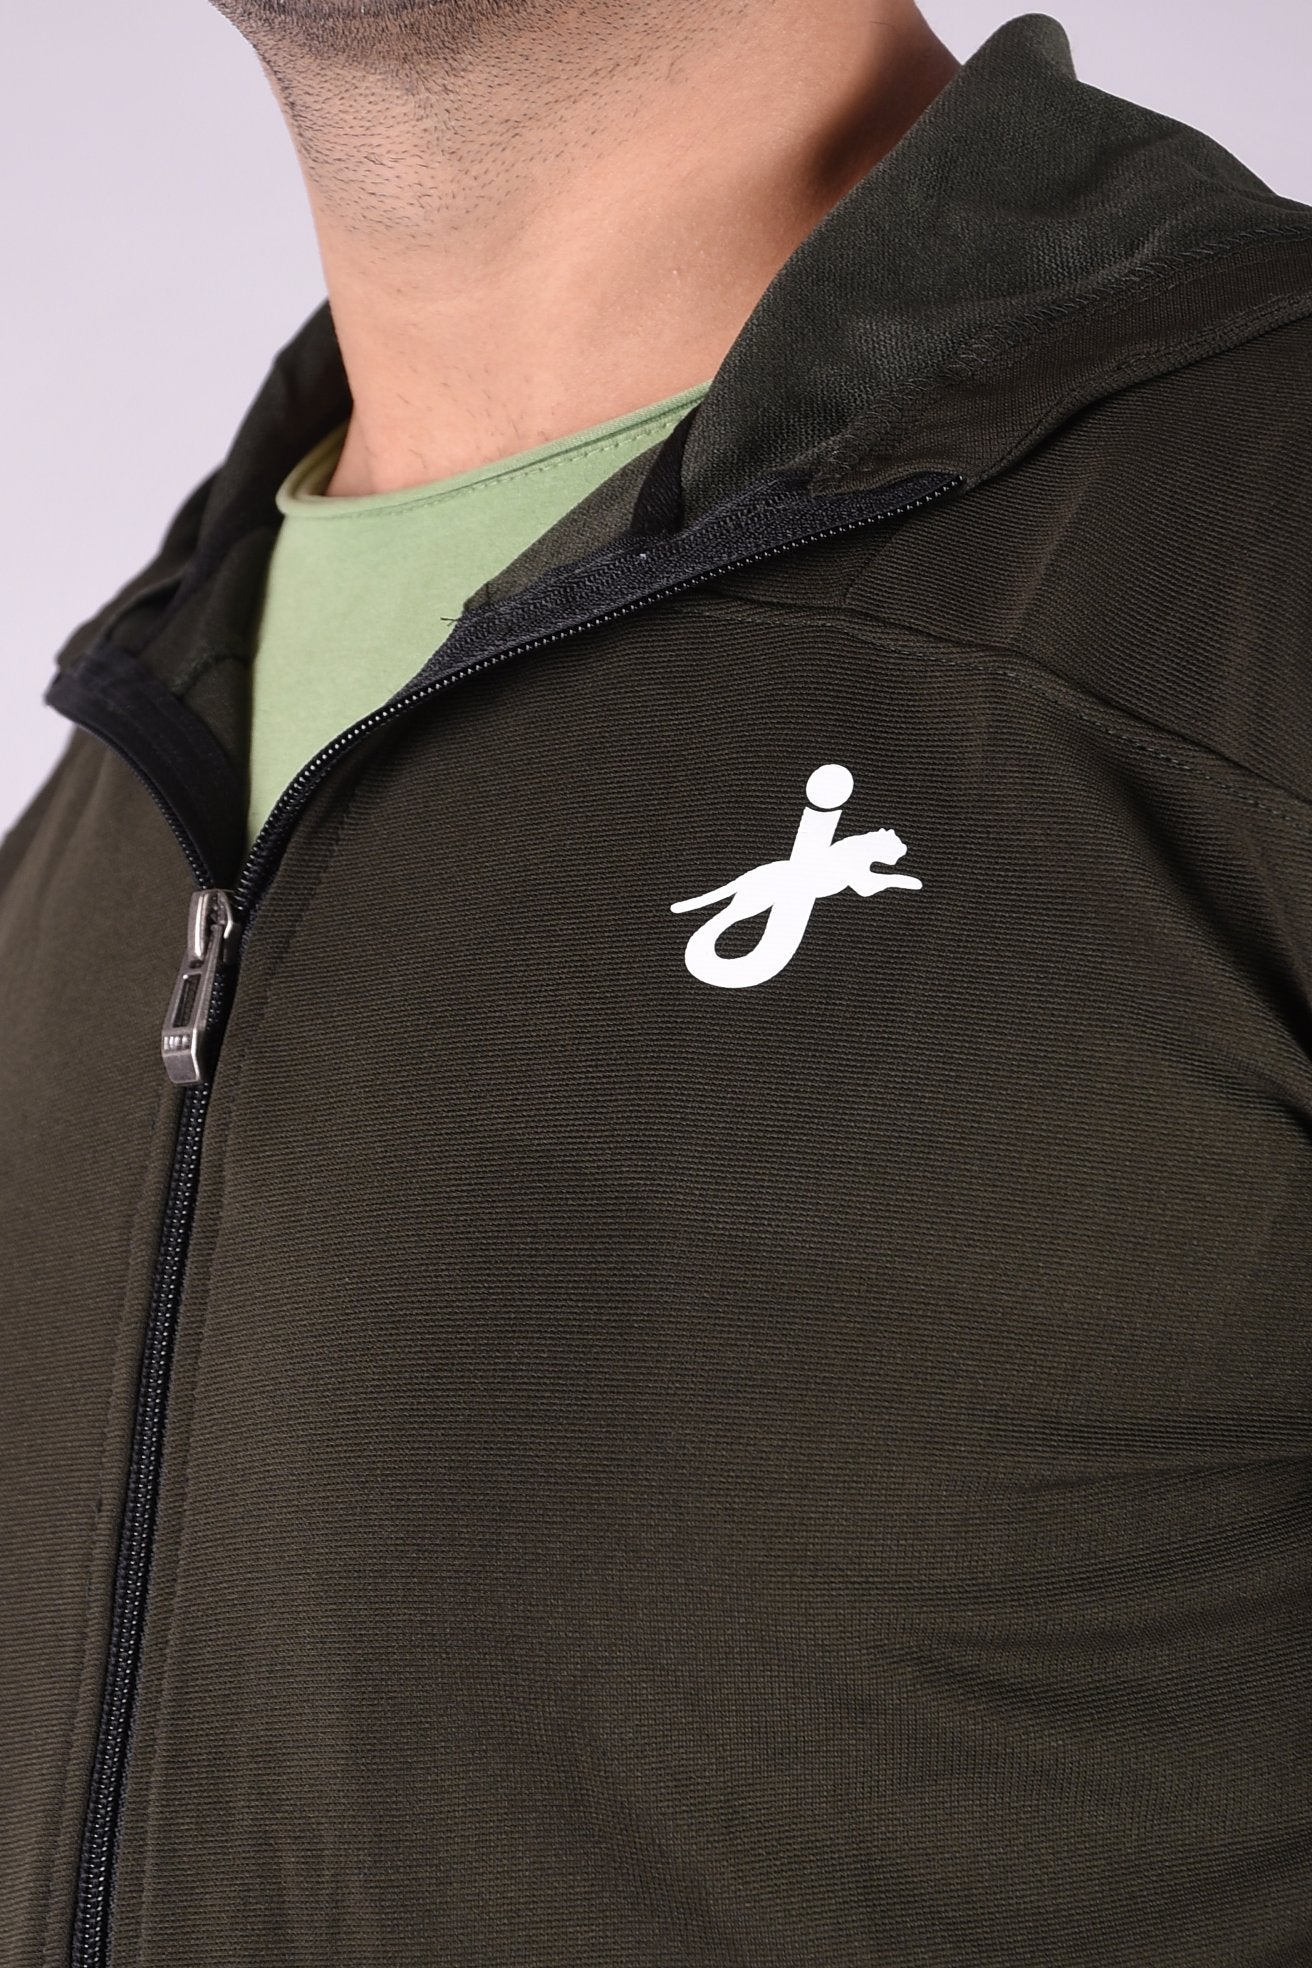 JAGURO Stylish Men's Polyester Zipper Olive Hoody Jacket